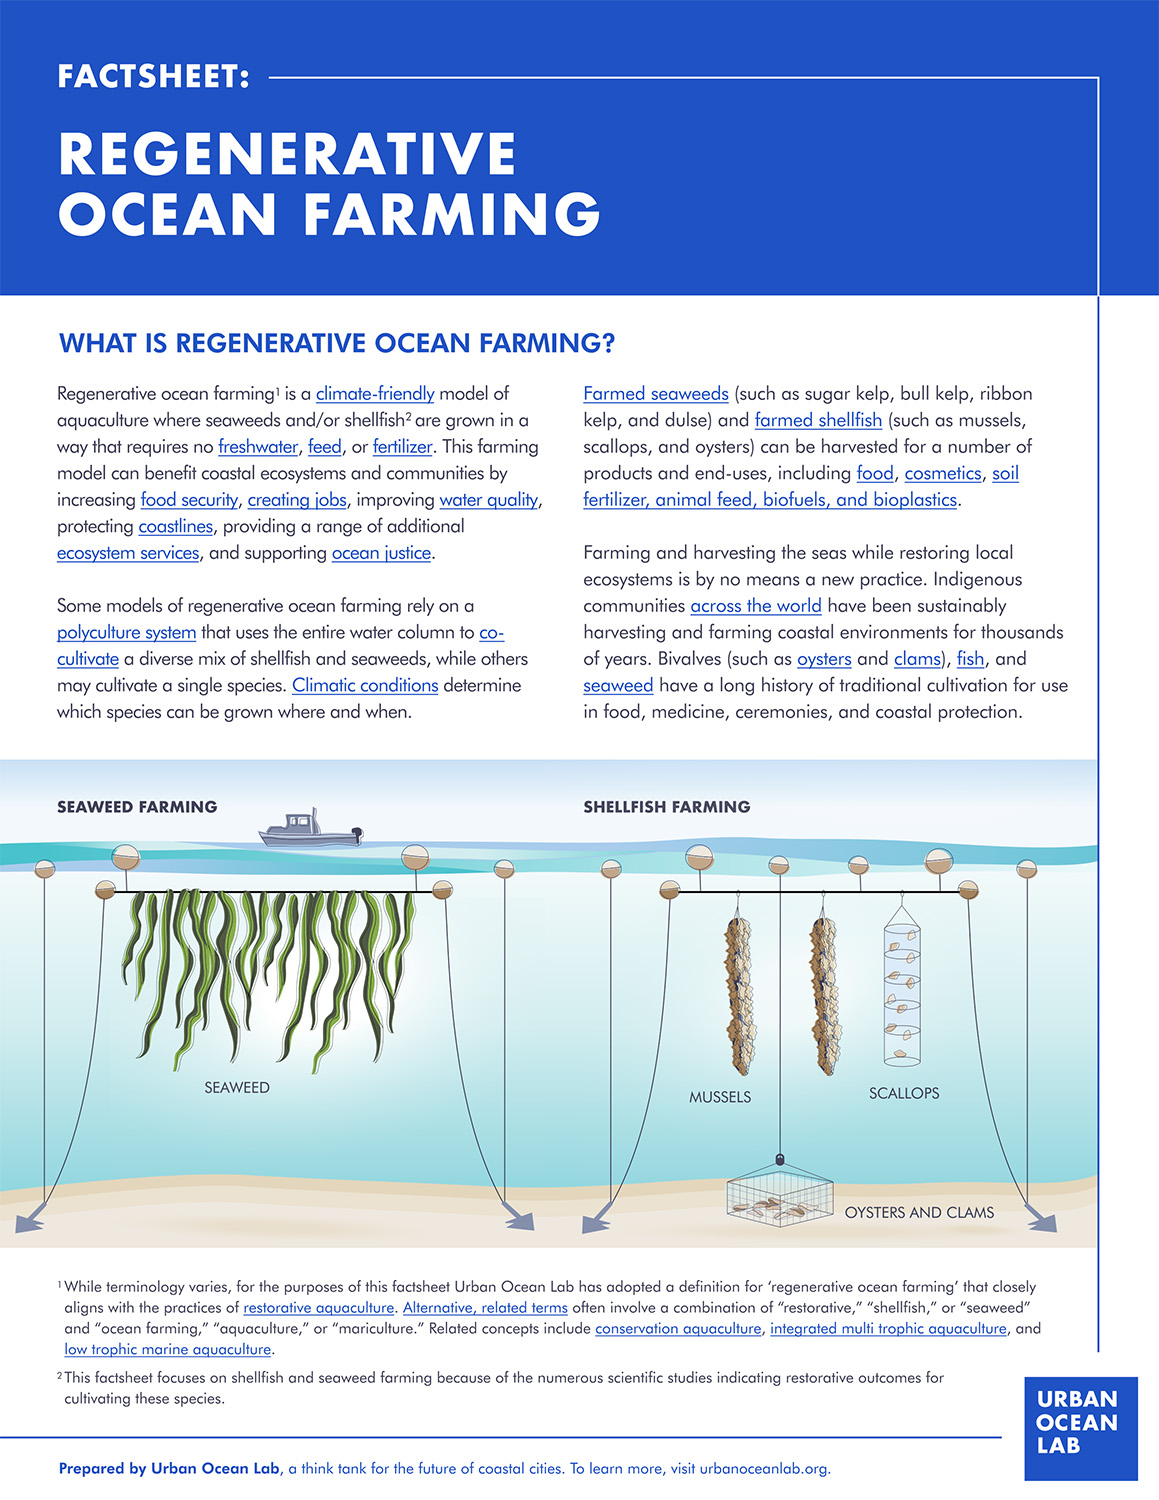 What is Regenerative Ocean Farming?